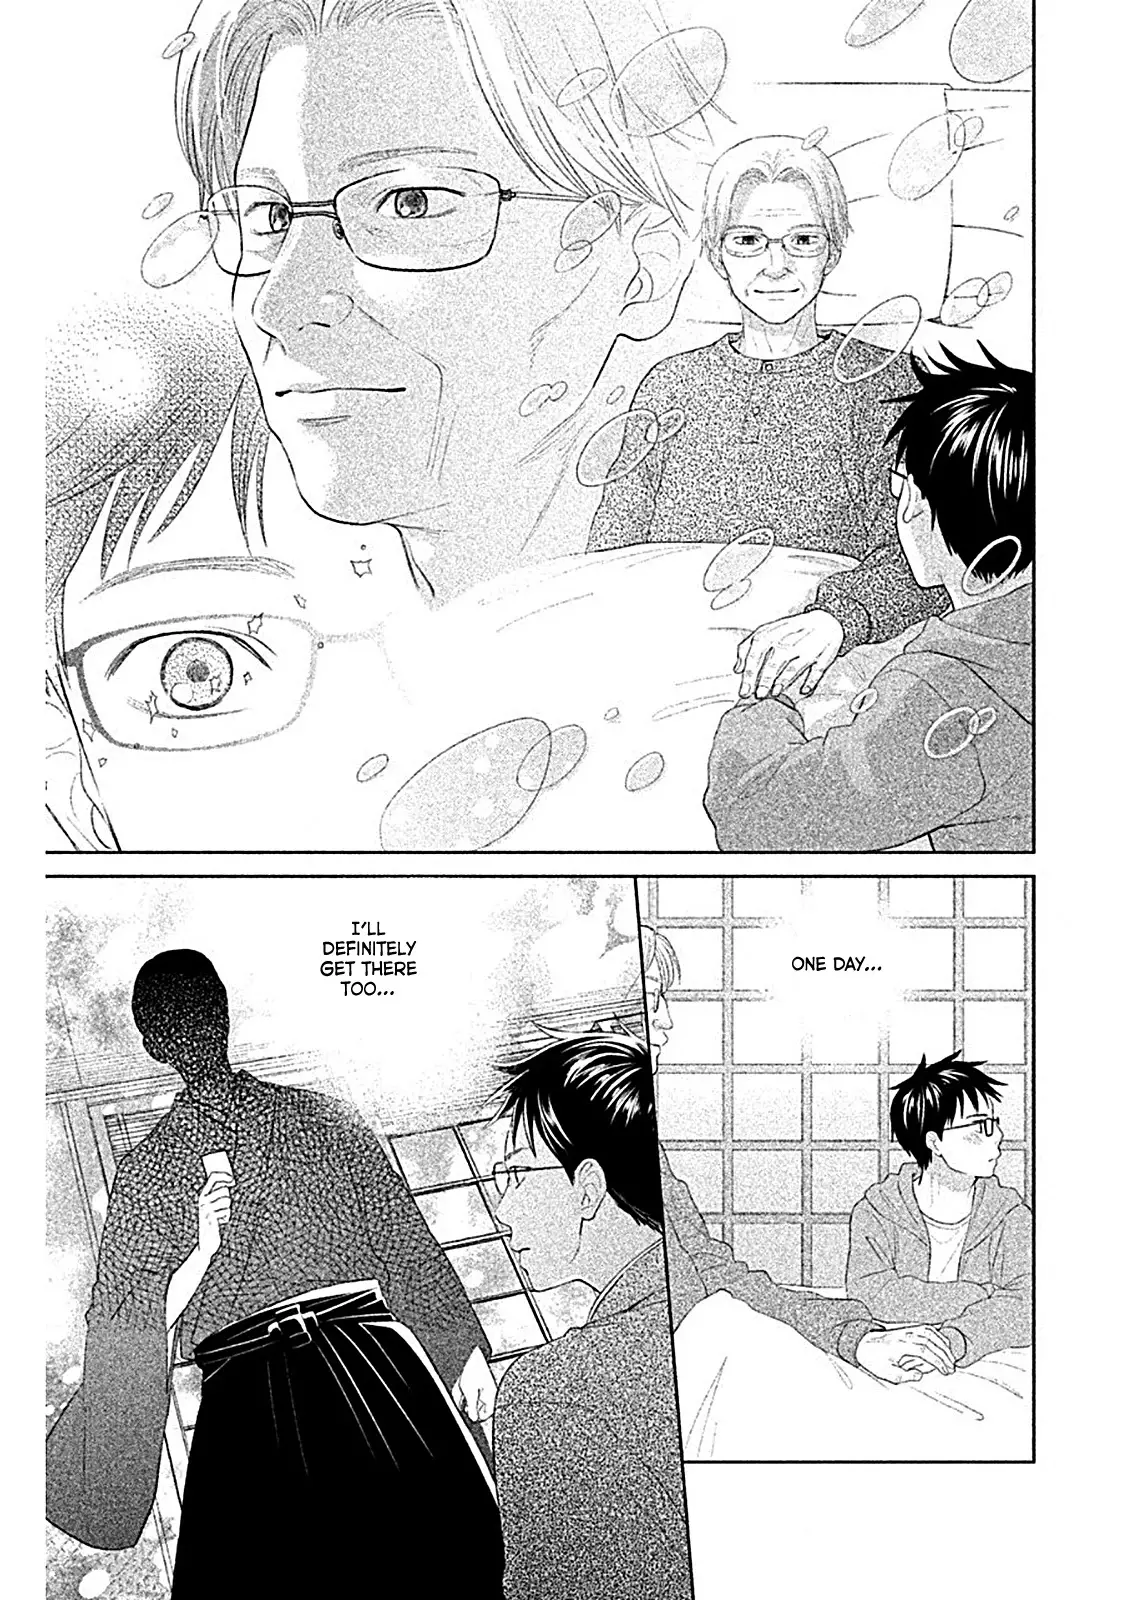 Chihayafuru: Middle School Arc - 6 page 6